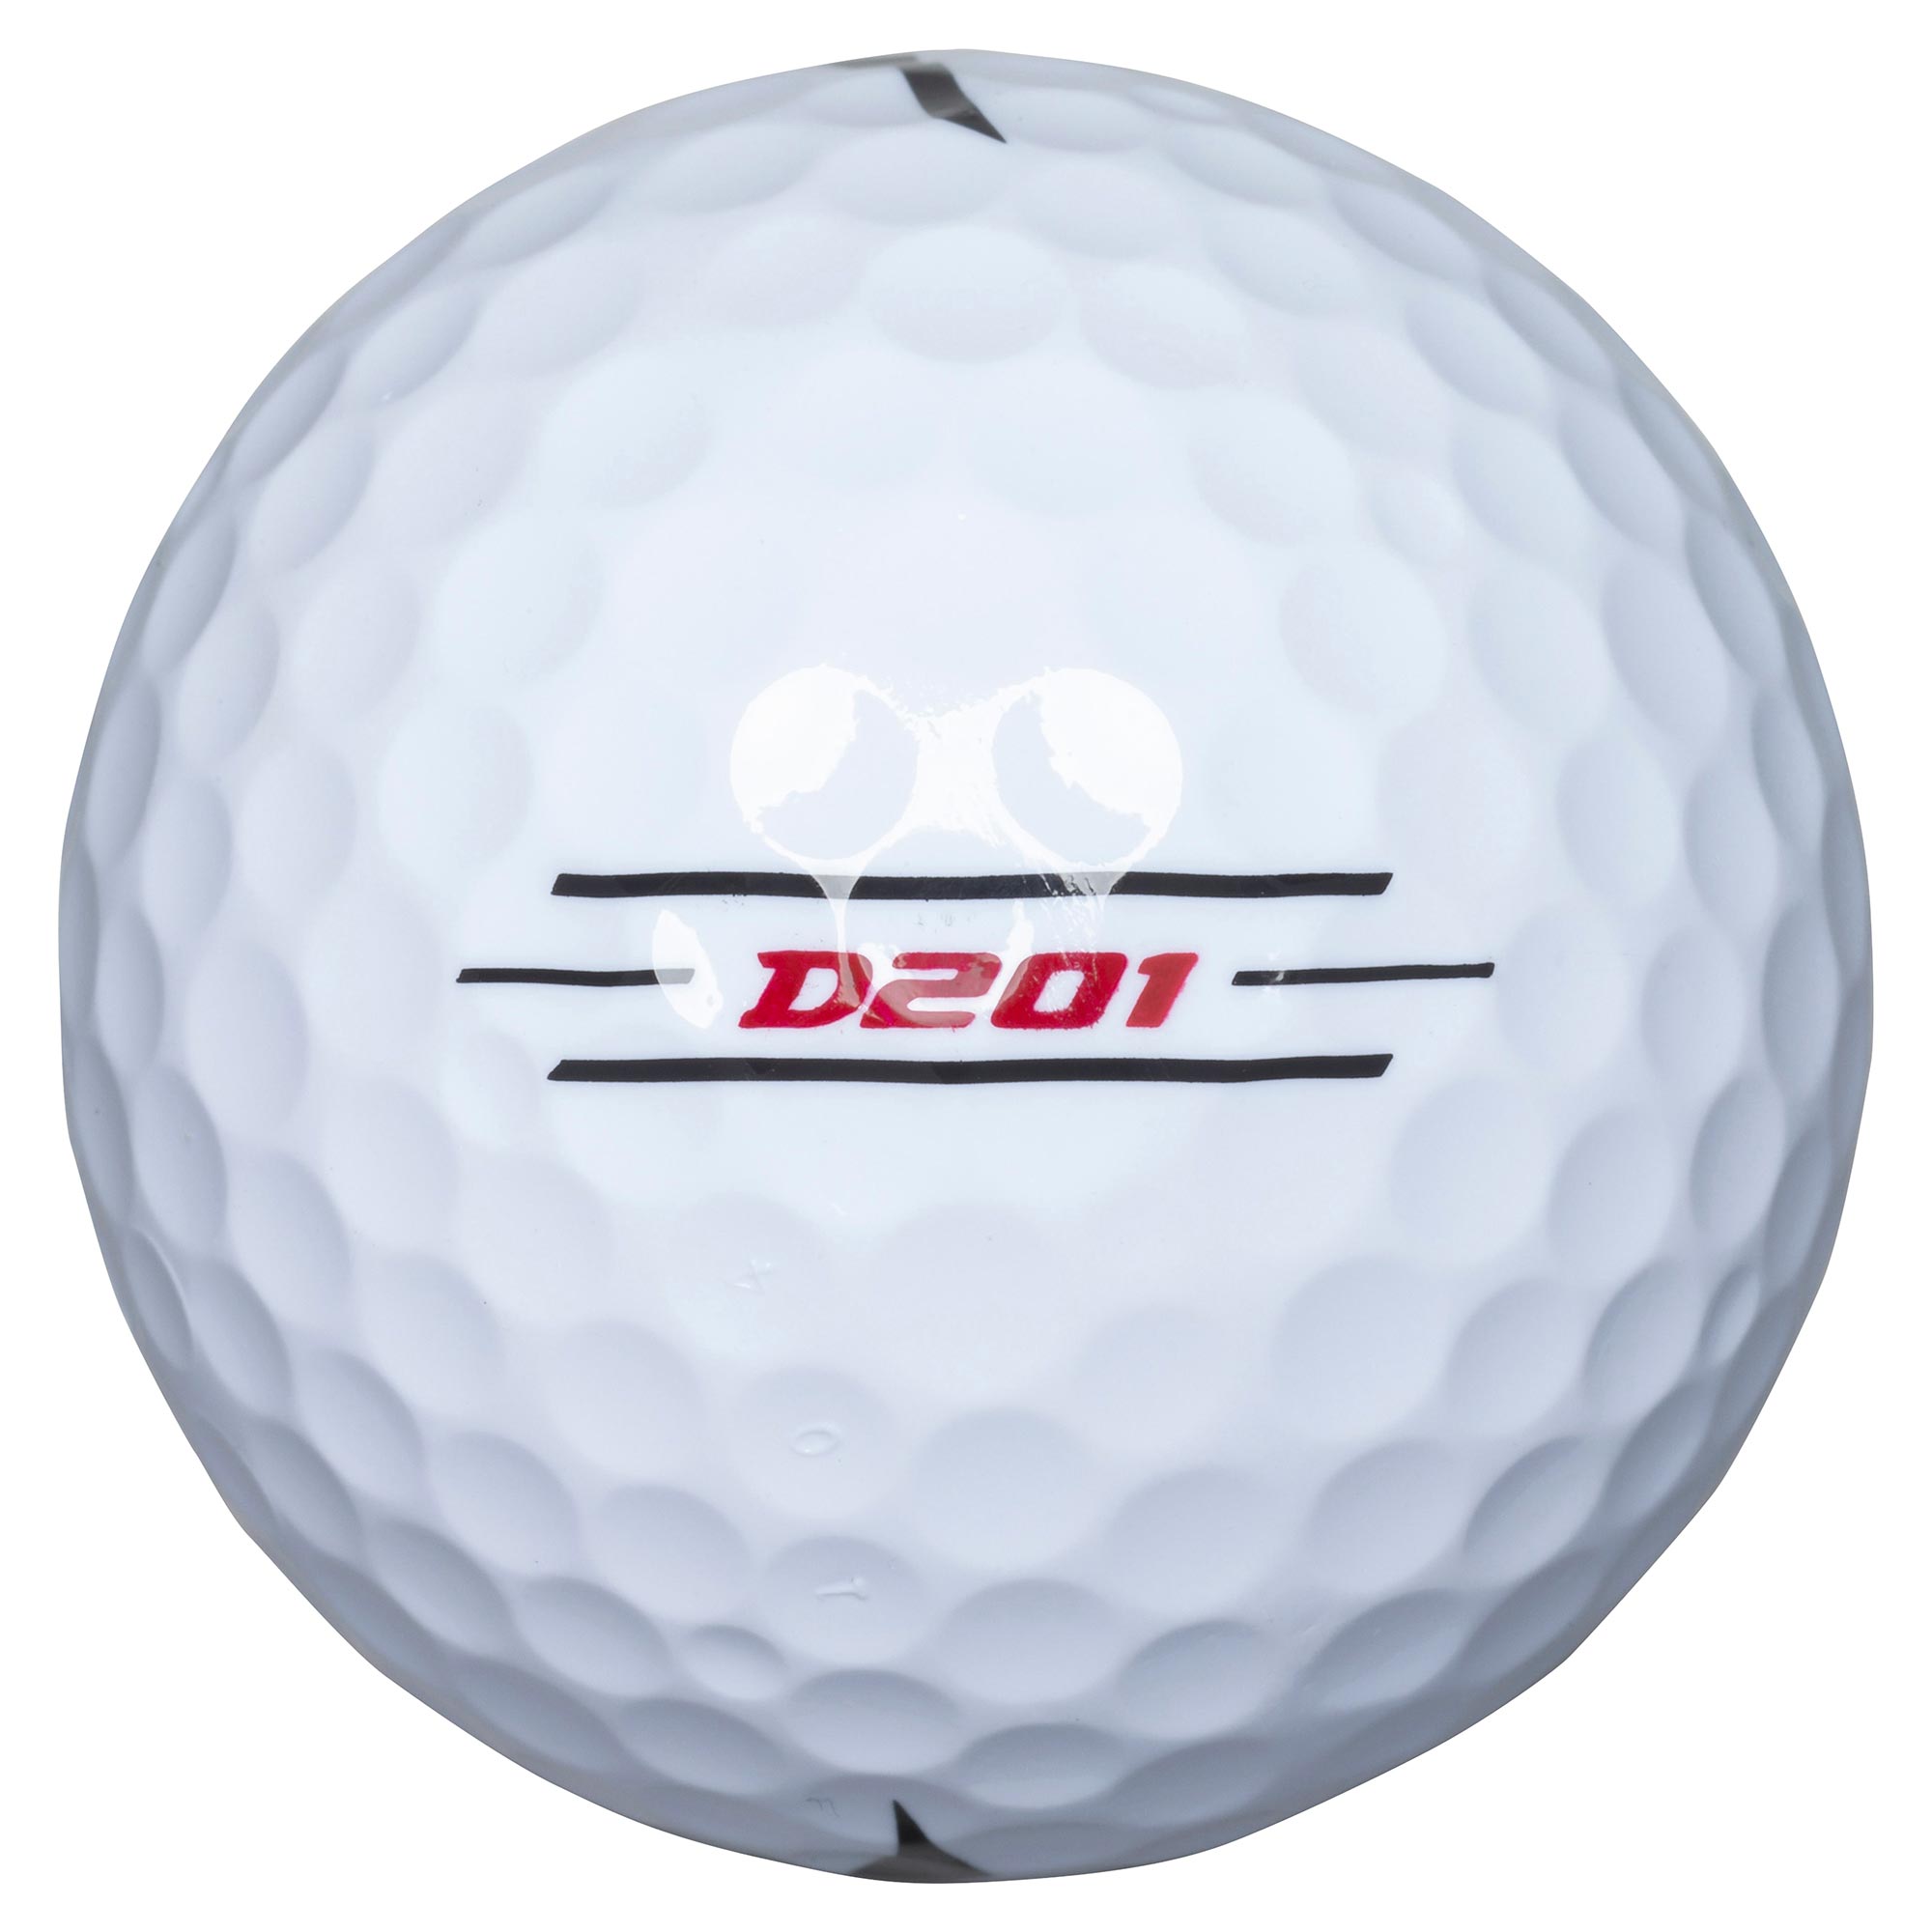 NEW D201 ホワイト(ダース)|5NJBD22010|ボール|ゴルフ|ミズノ公式 